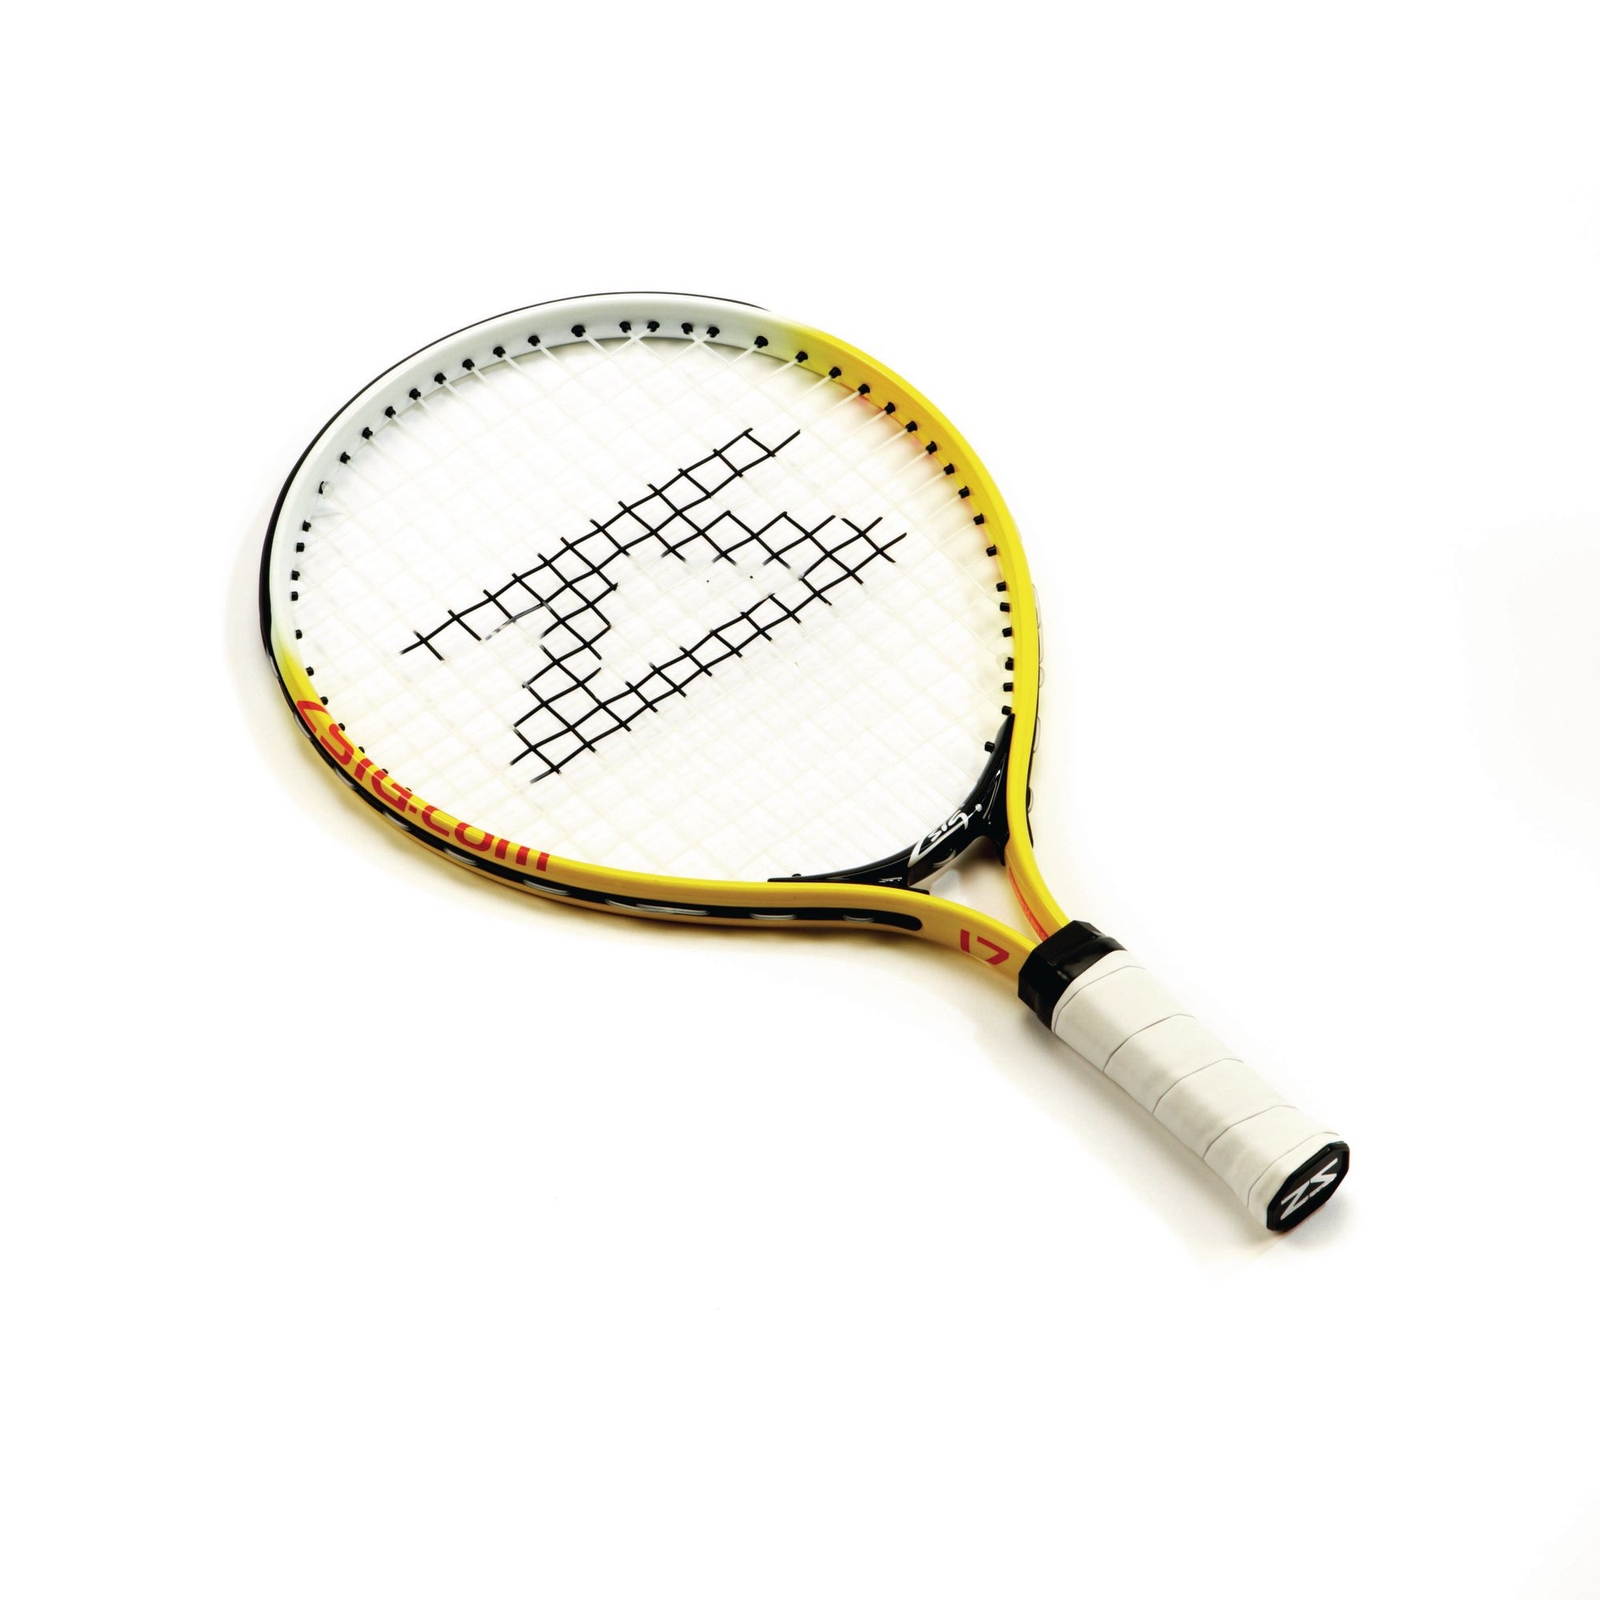 Zsig Yellow Tennis Racket - 17in" - Each